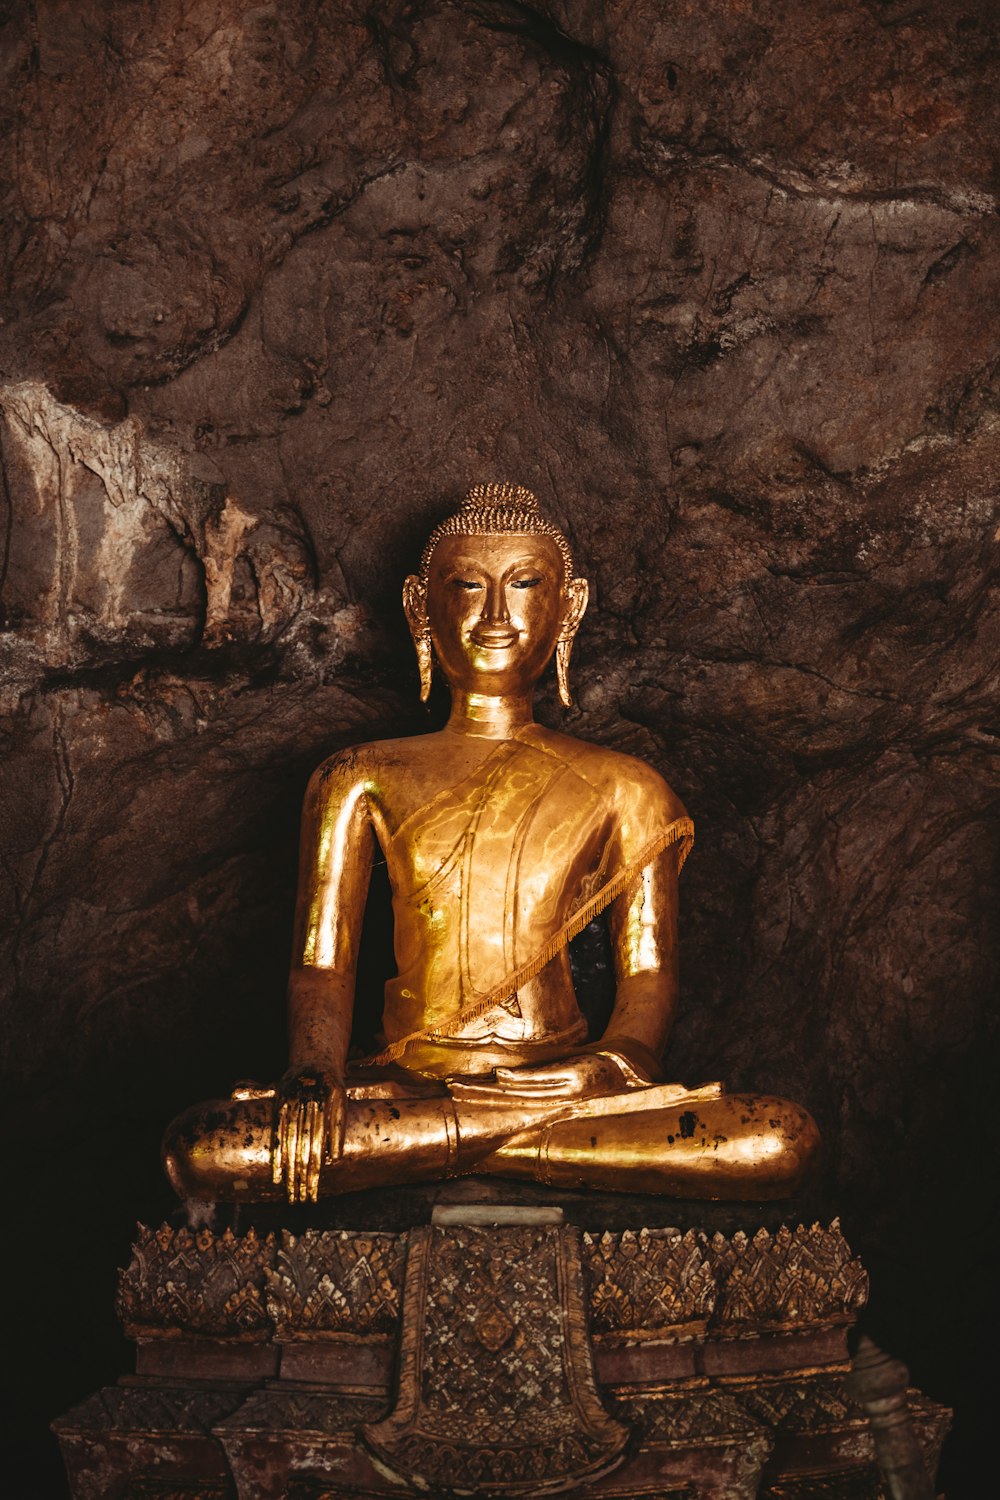 Una statua dorata del Buddha seduta in una grotta